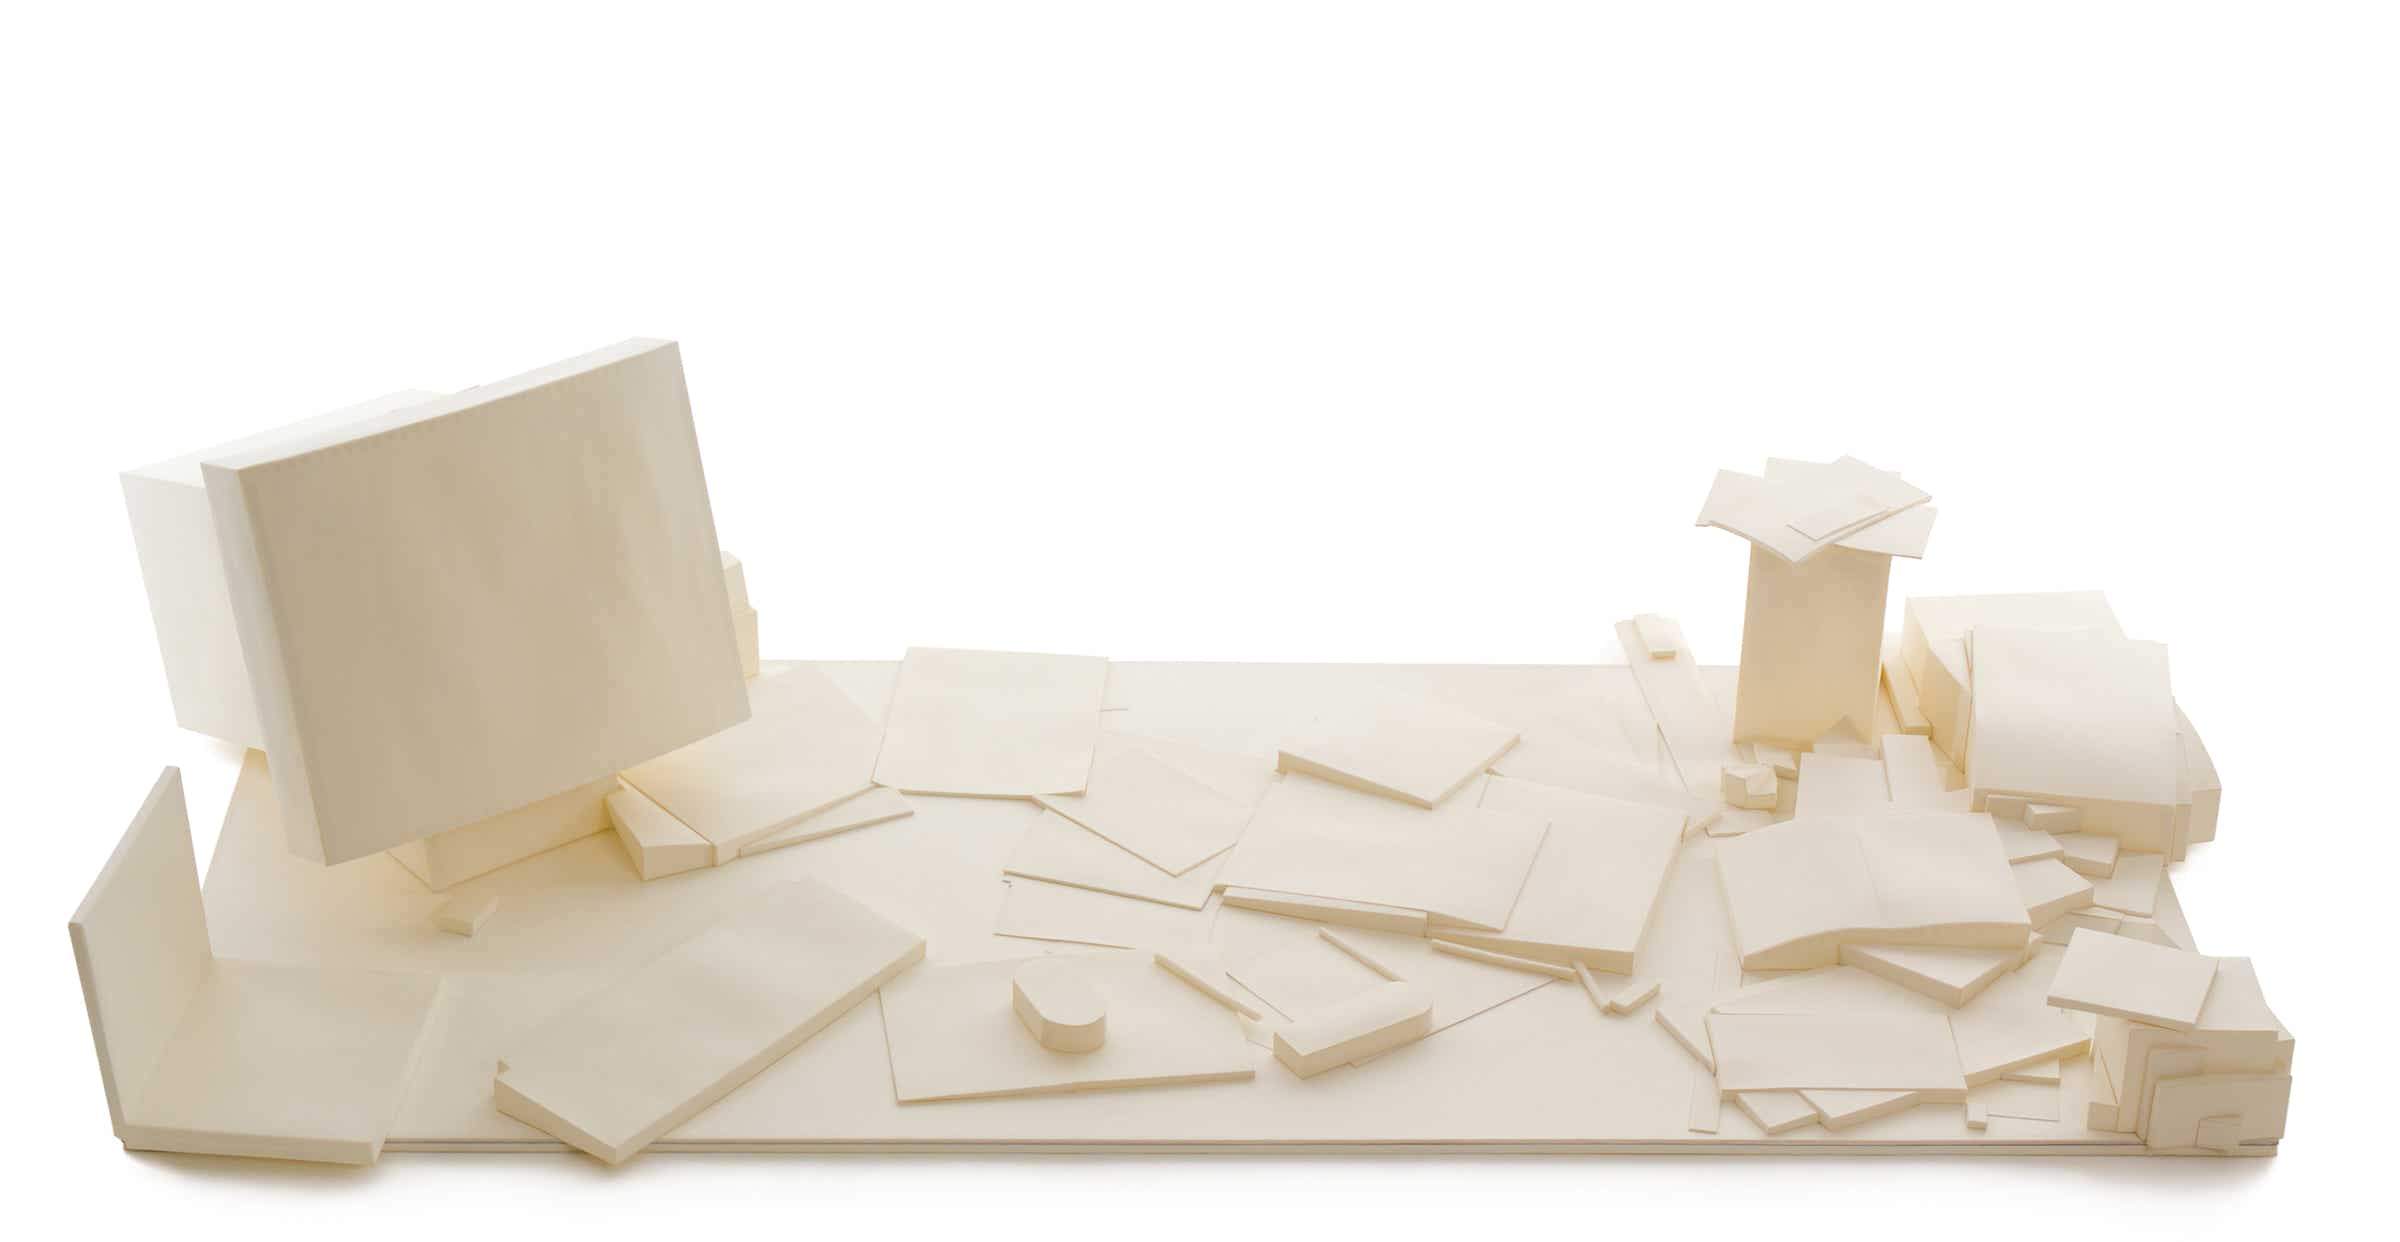 Paper object of the series »Schreibtische« [Desks] by Herbert Stattler.